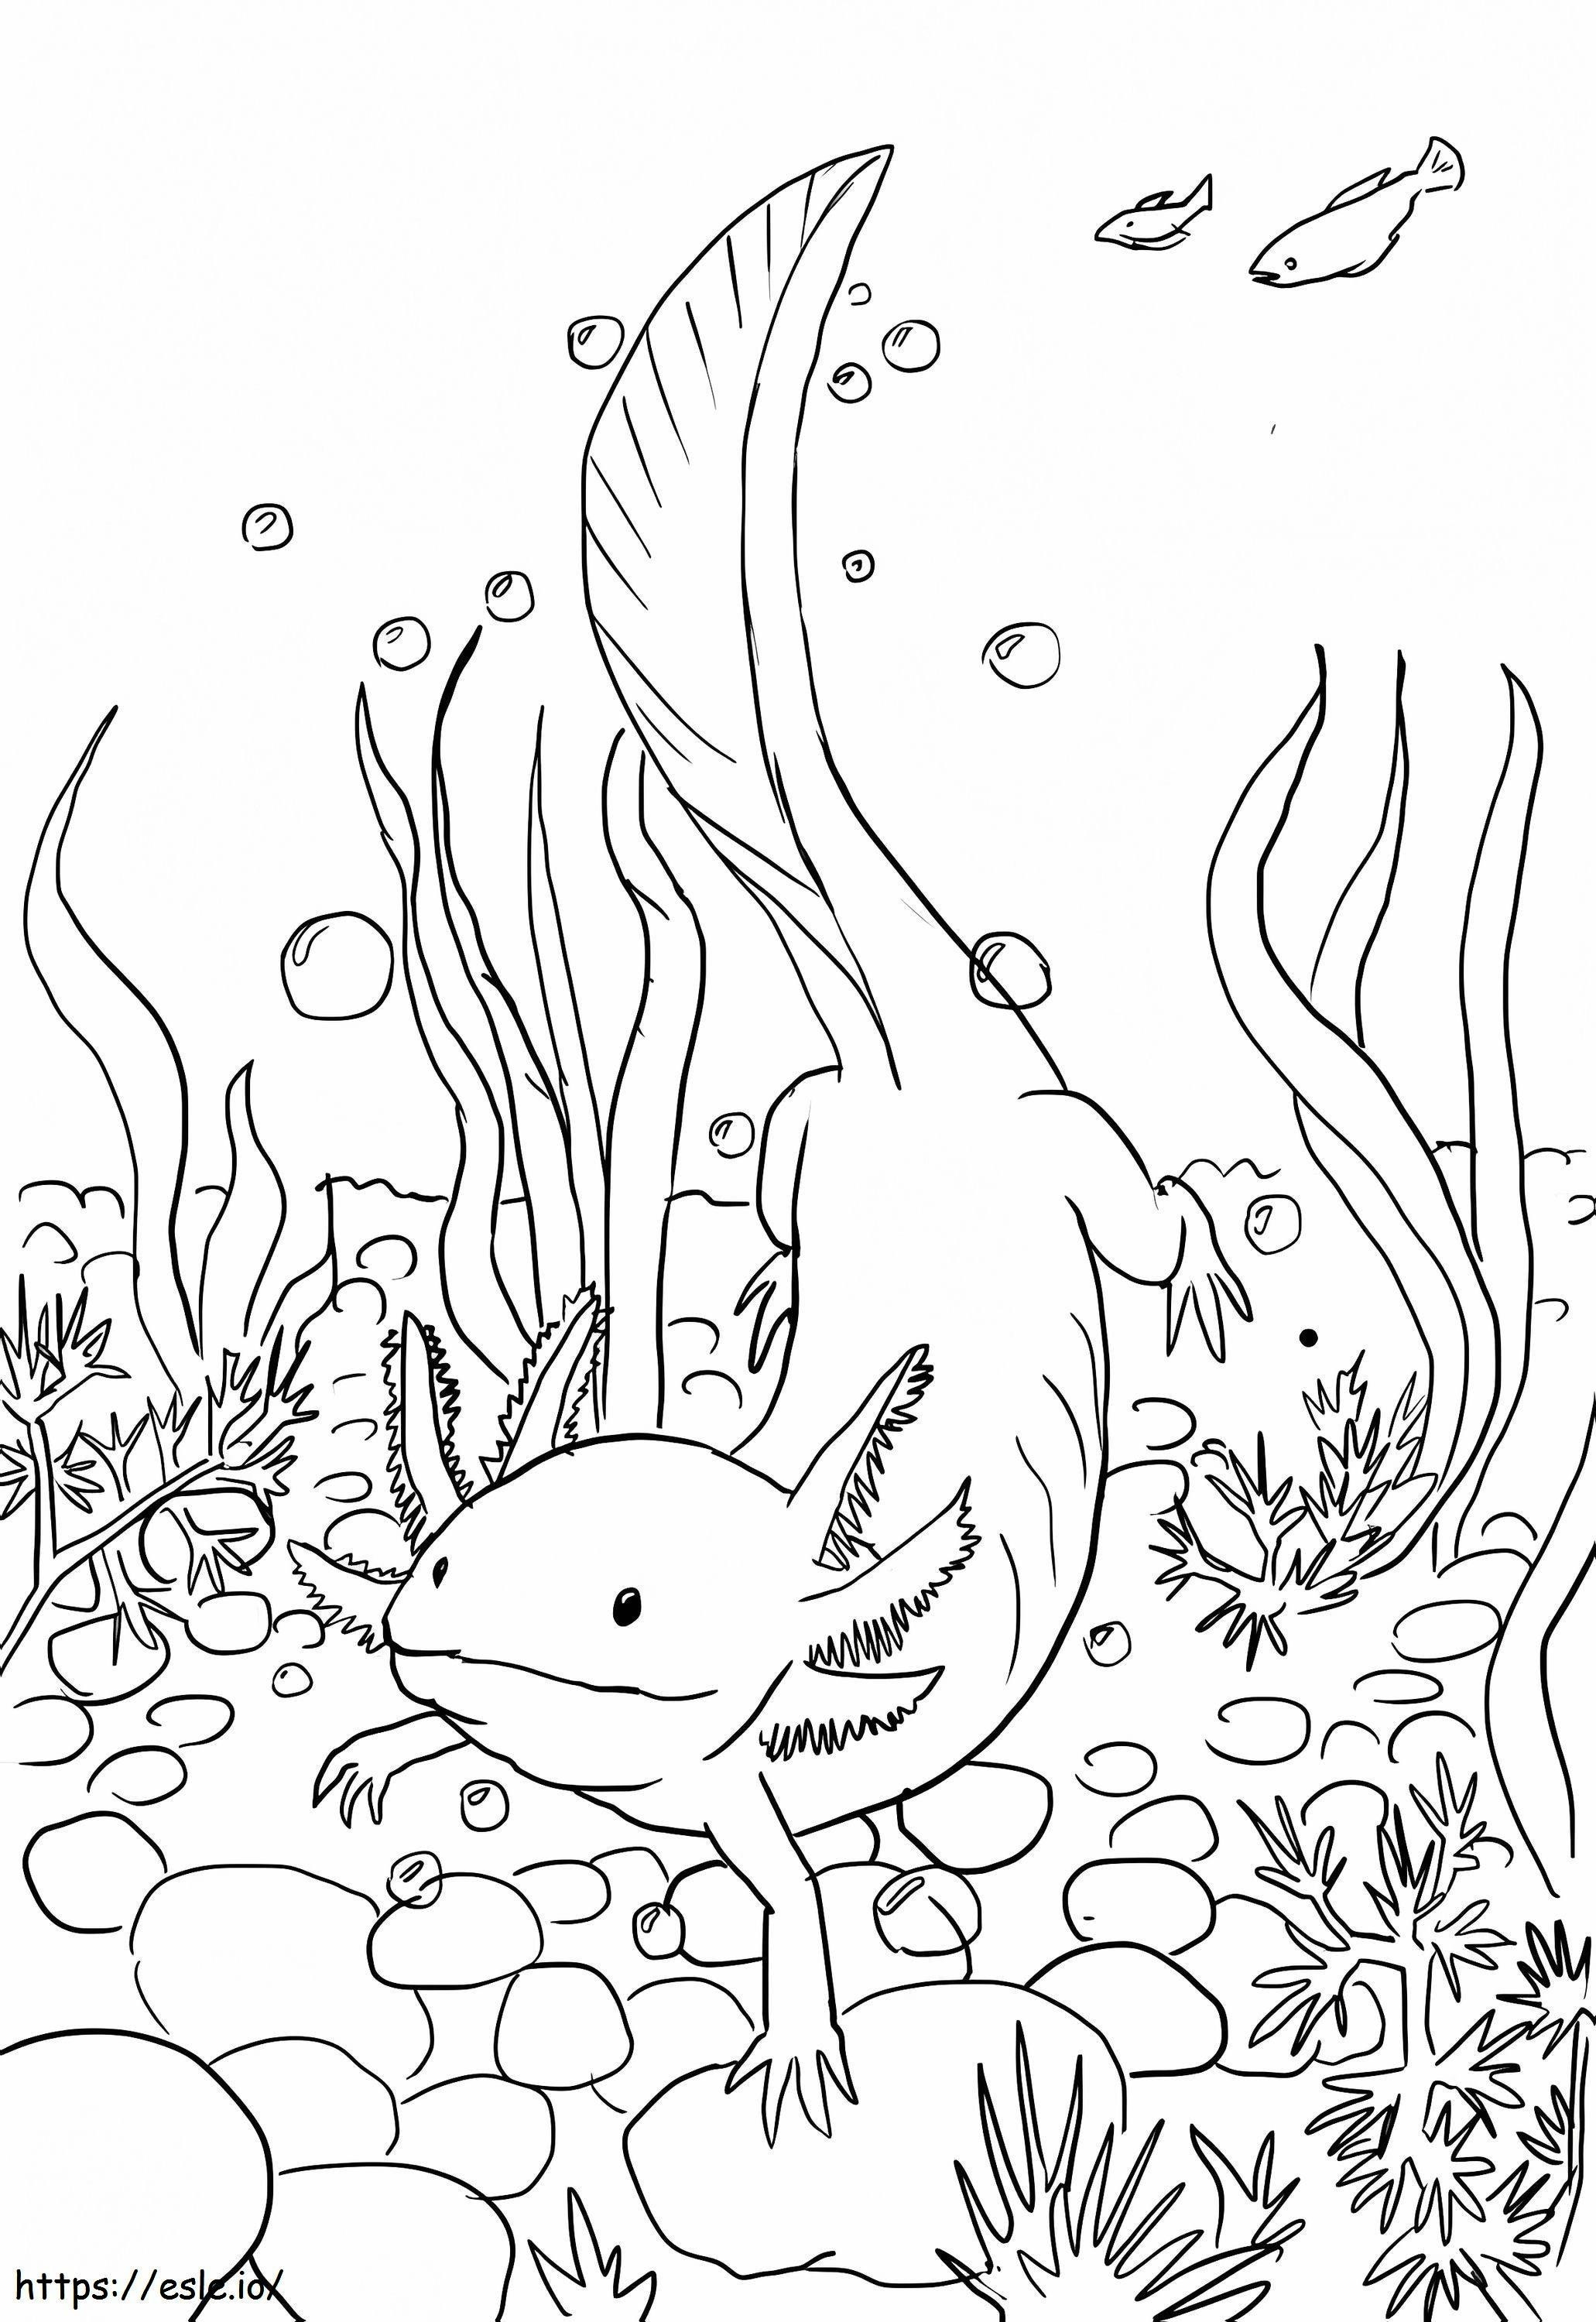 Axolotl schwimmen ausmalbilder